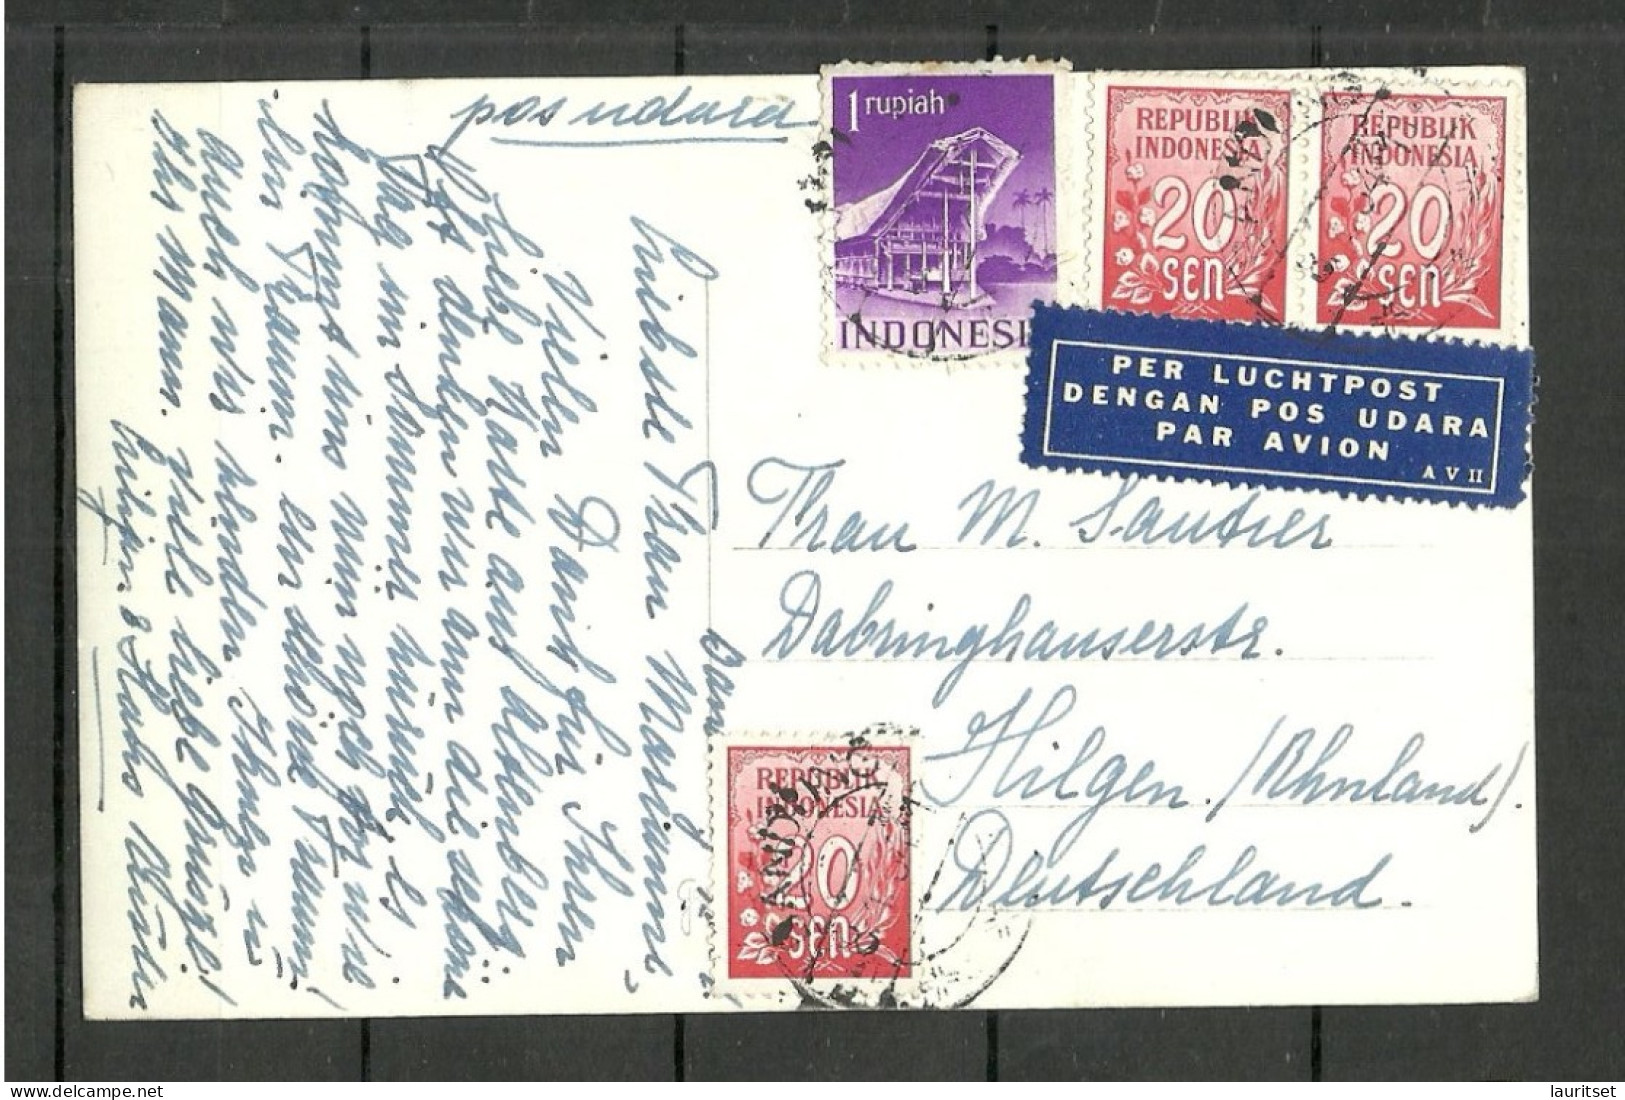 INDONESIA 1964 Klenteng Tiong Hoa Bandung Air Mail Post Card Sent To Finland. Rare Destination - Indonesia